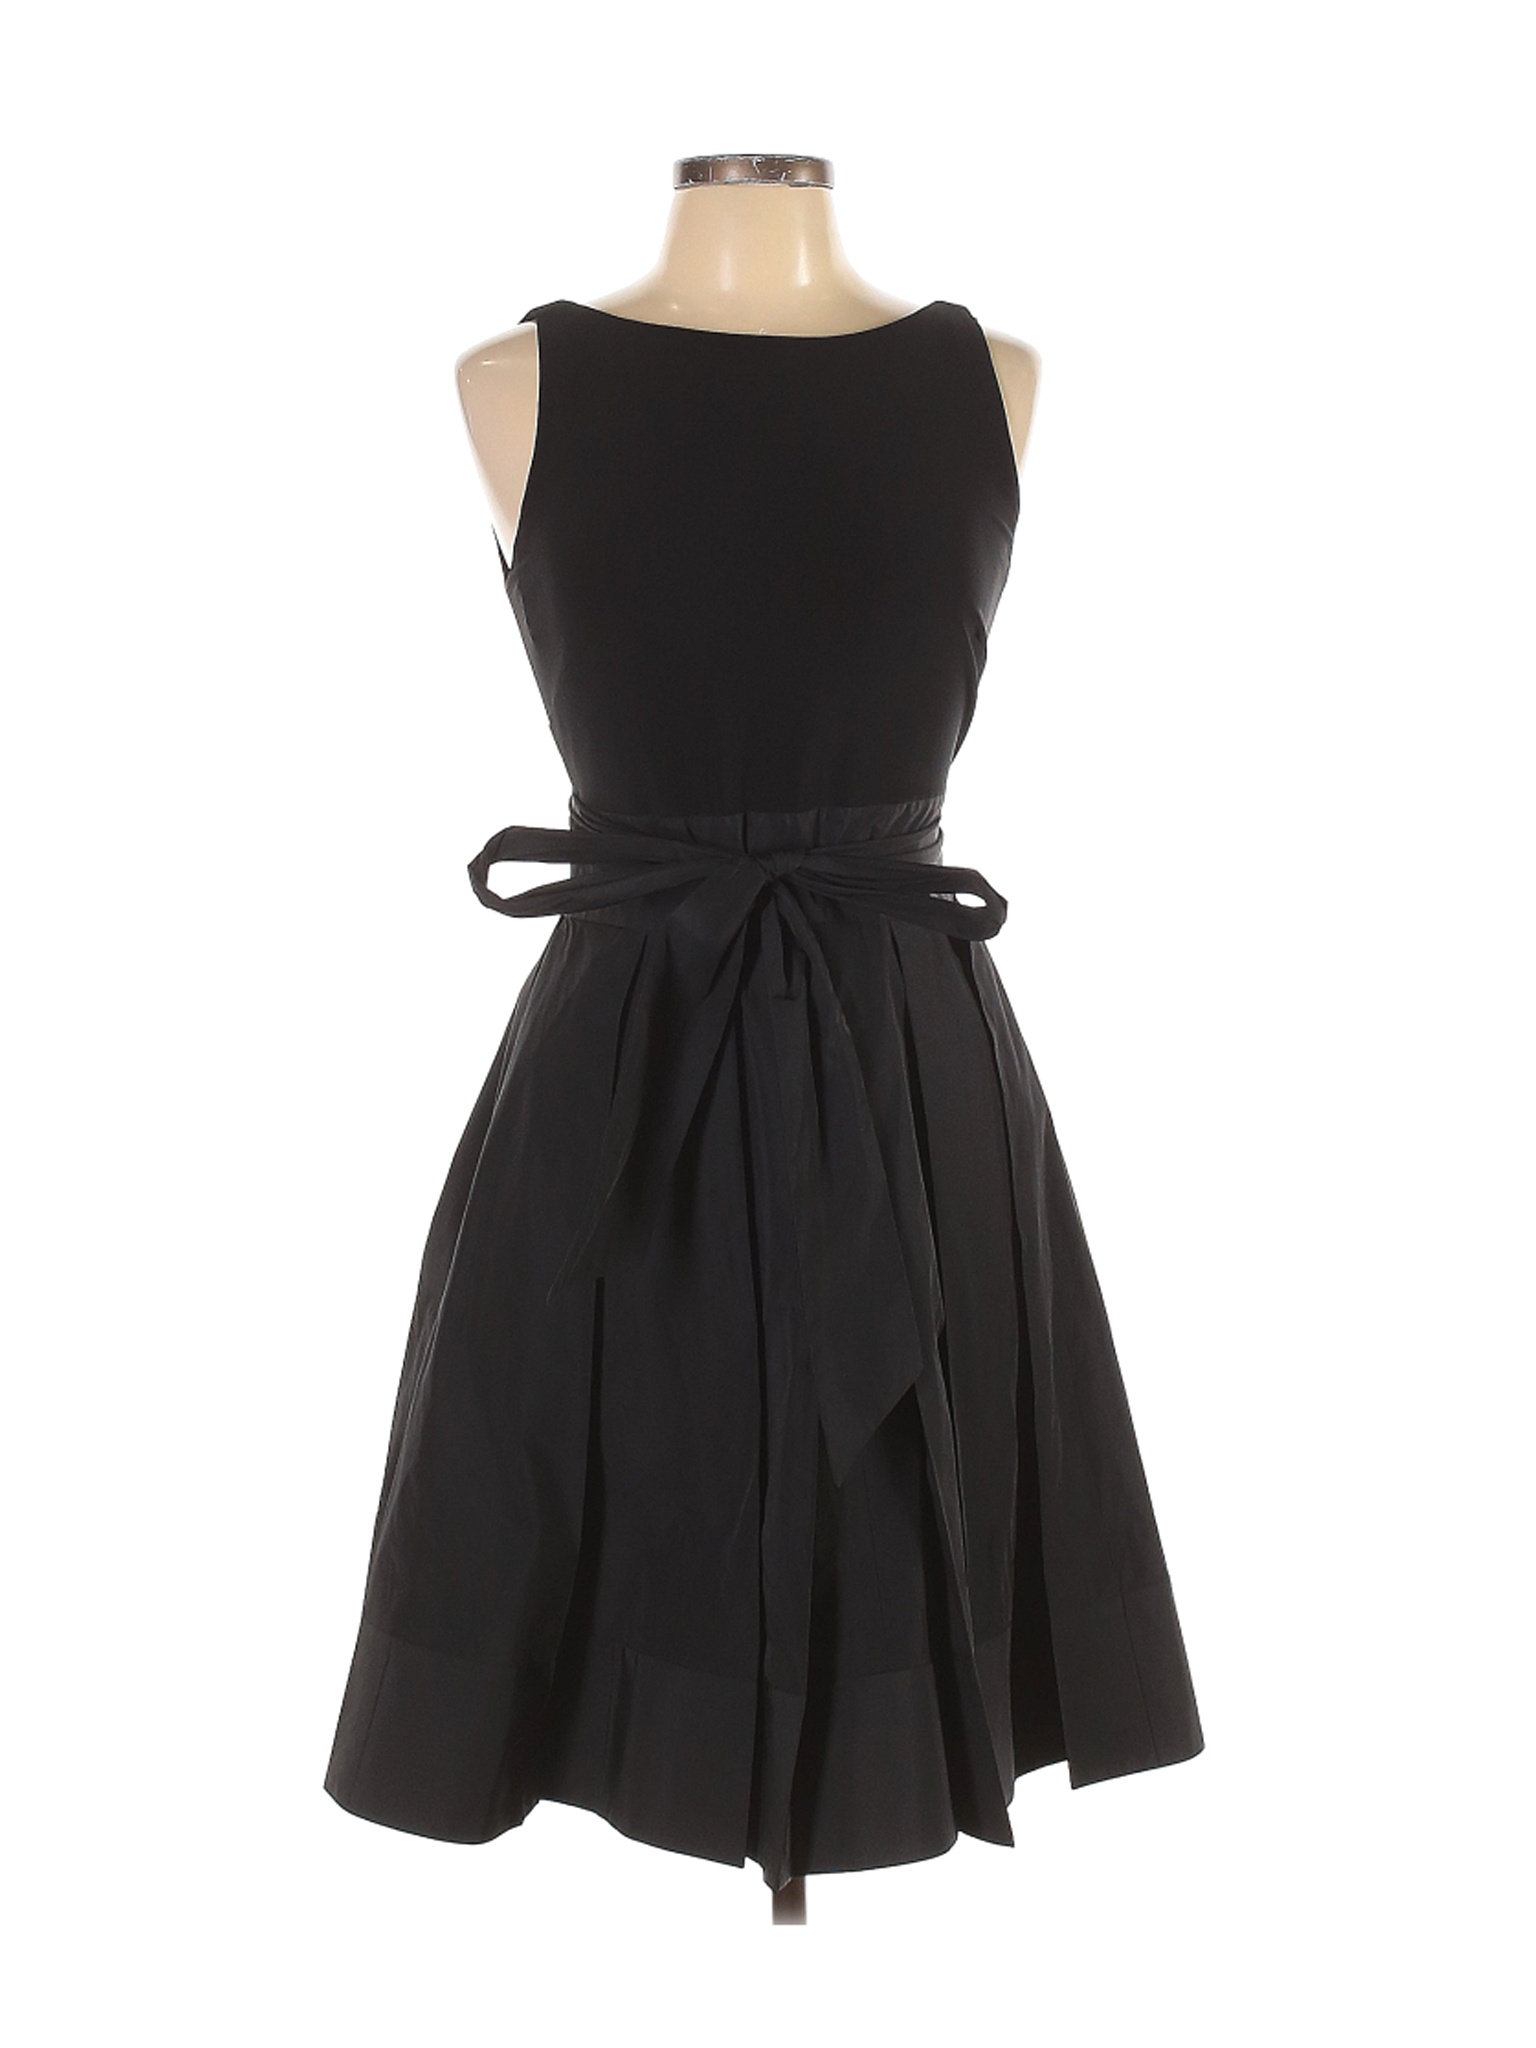 NWT Lauren by Ralph Lauren Women Black Cocktail Dress 12 Petites | eBay